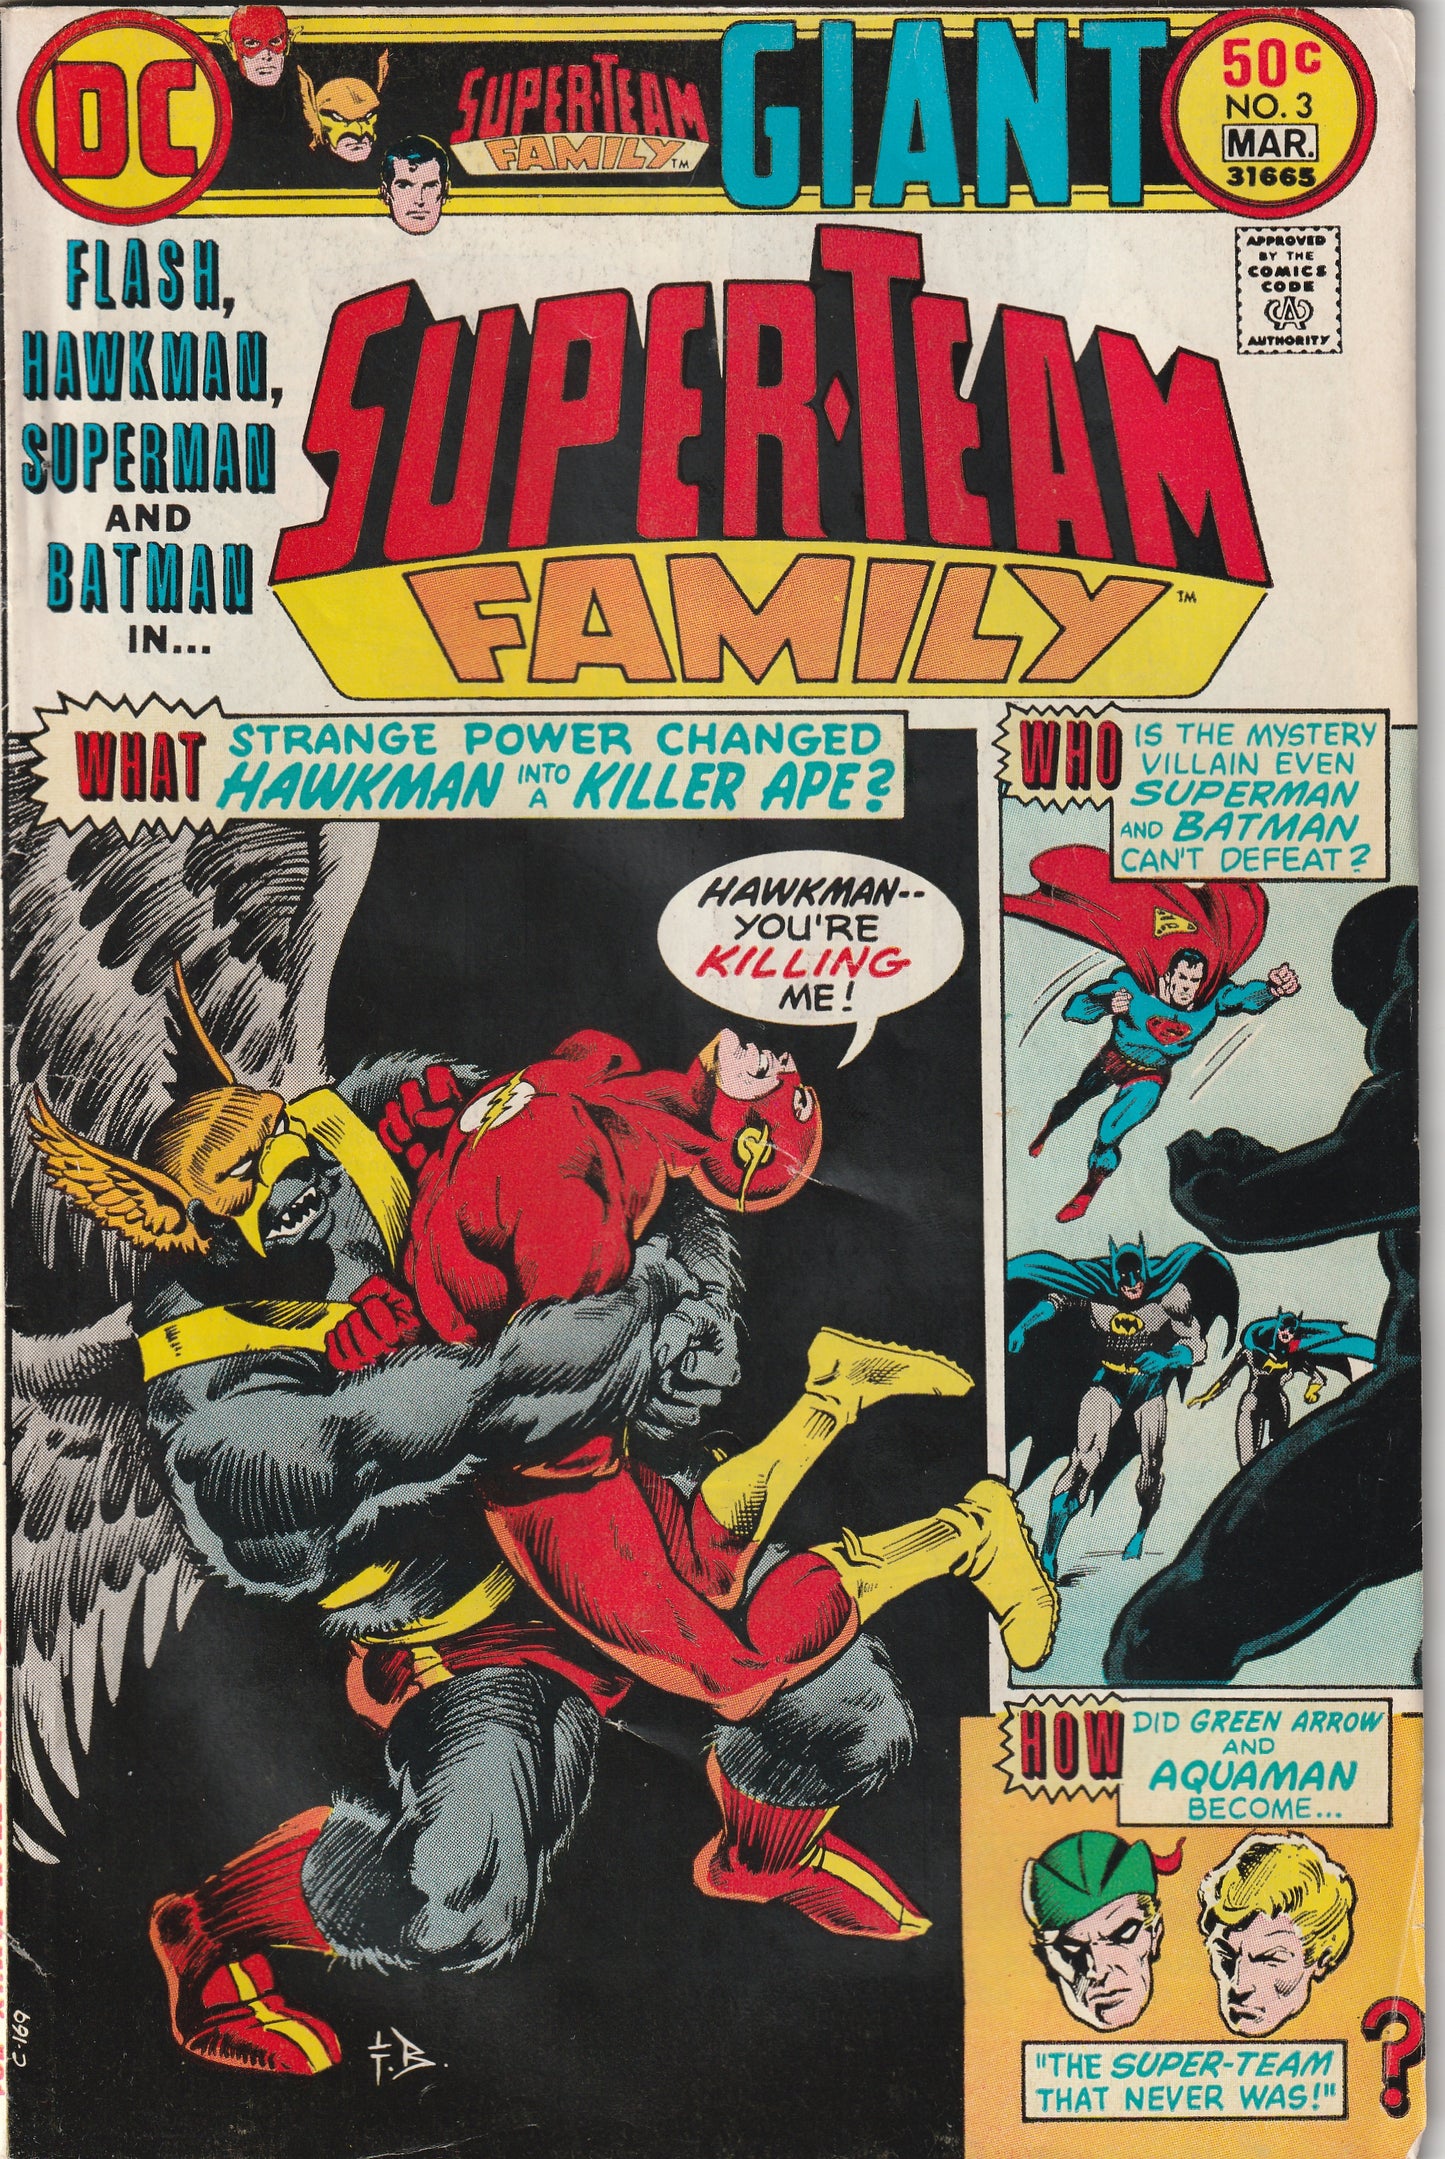 Super-Team Family #3 (1976) Giant - Batman & Superman by Neal Adams